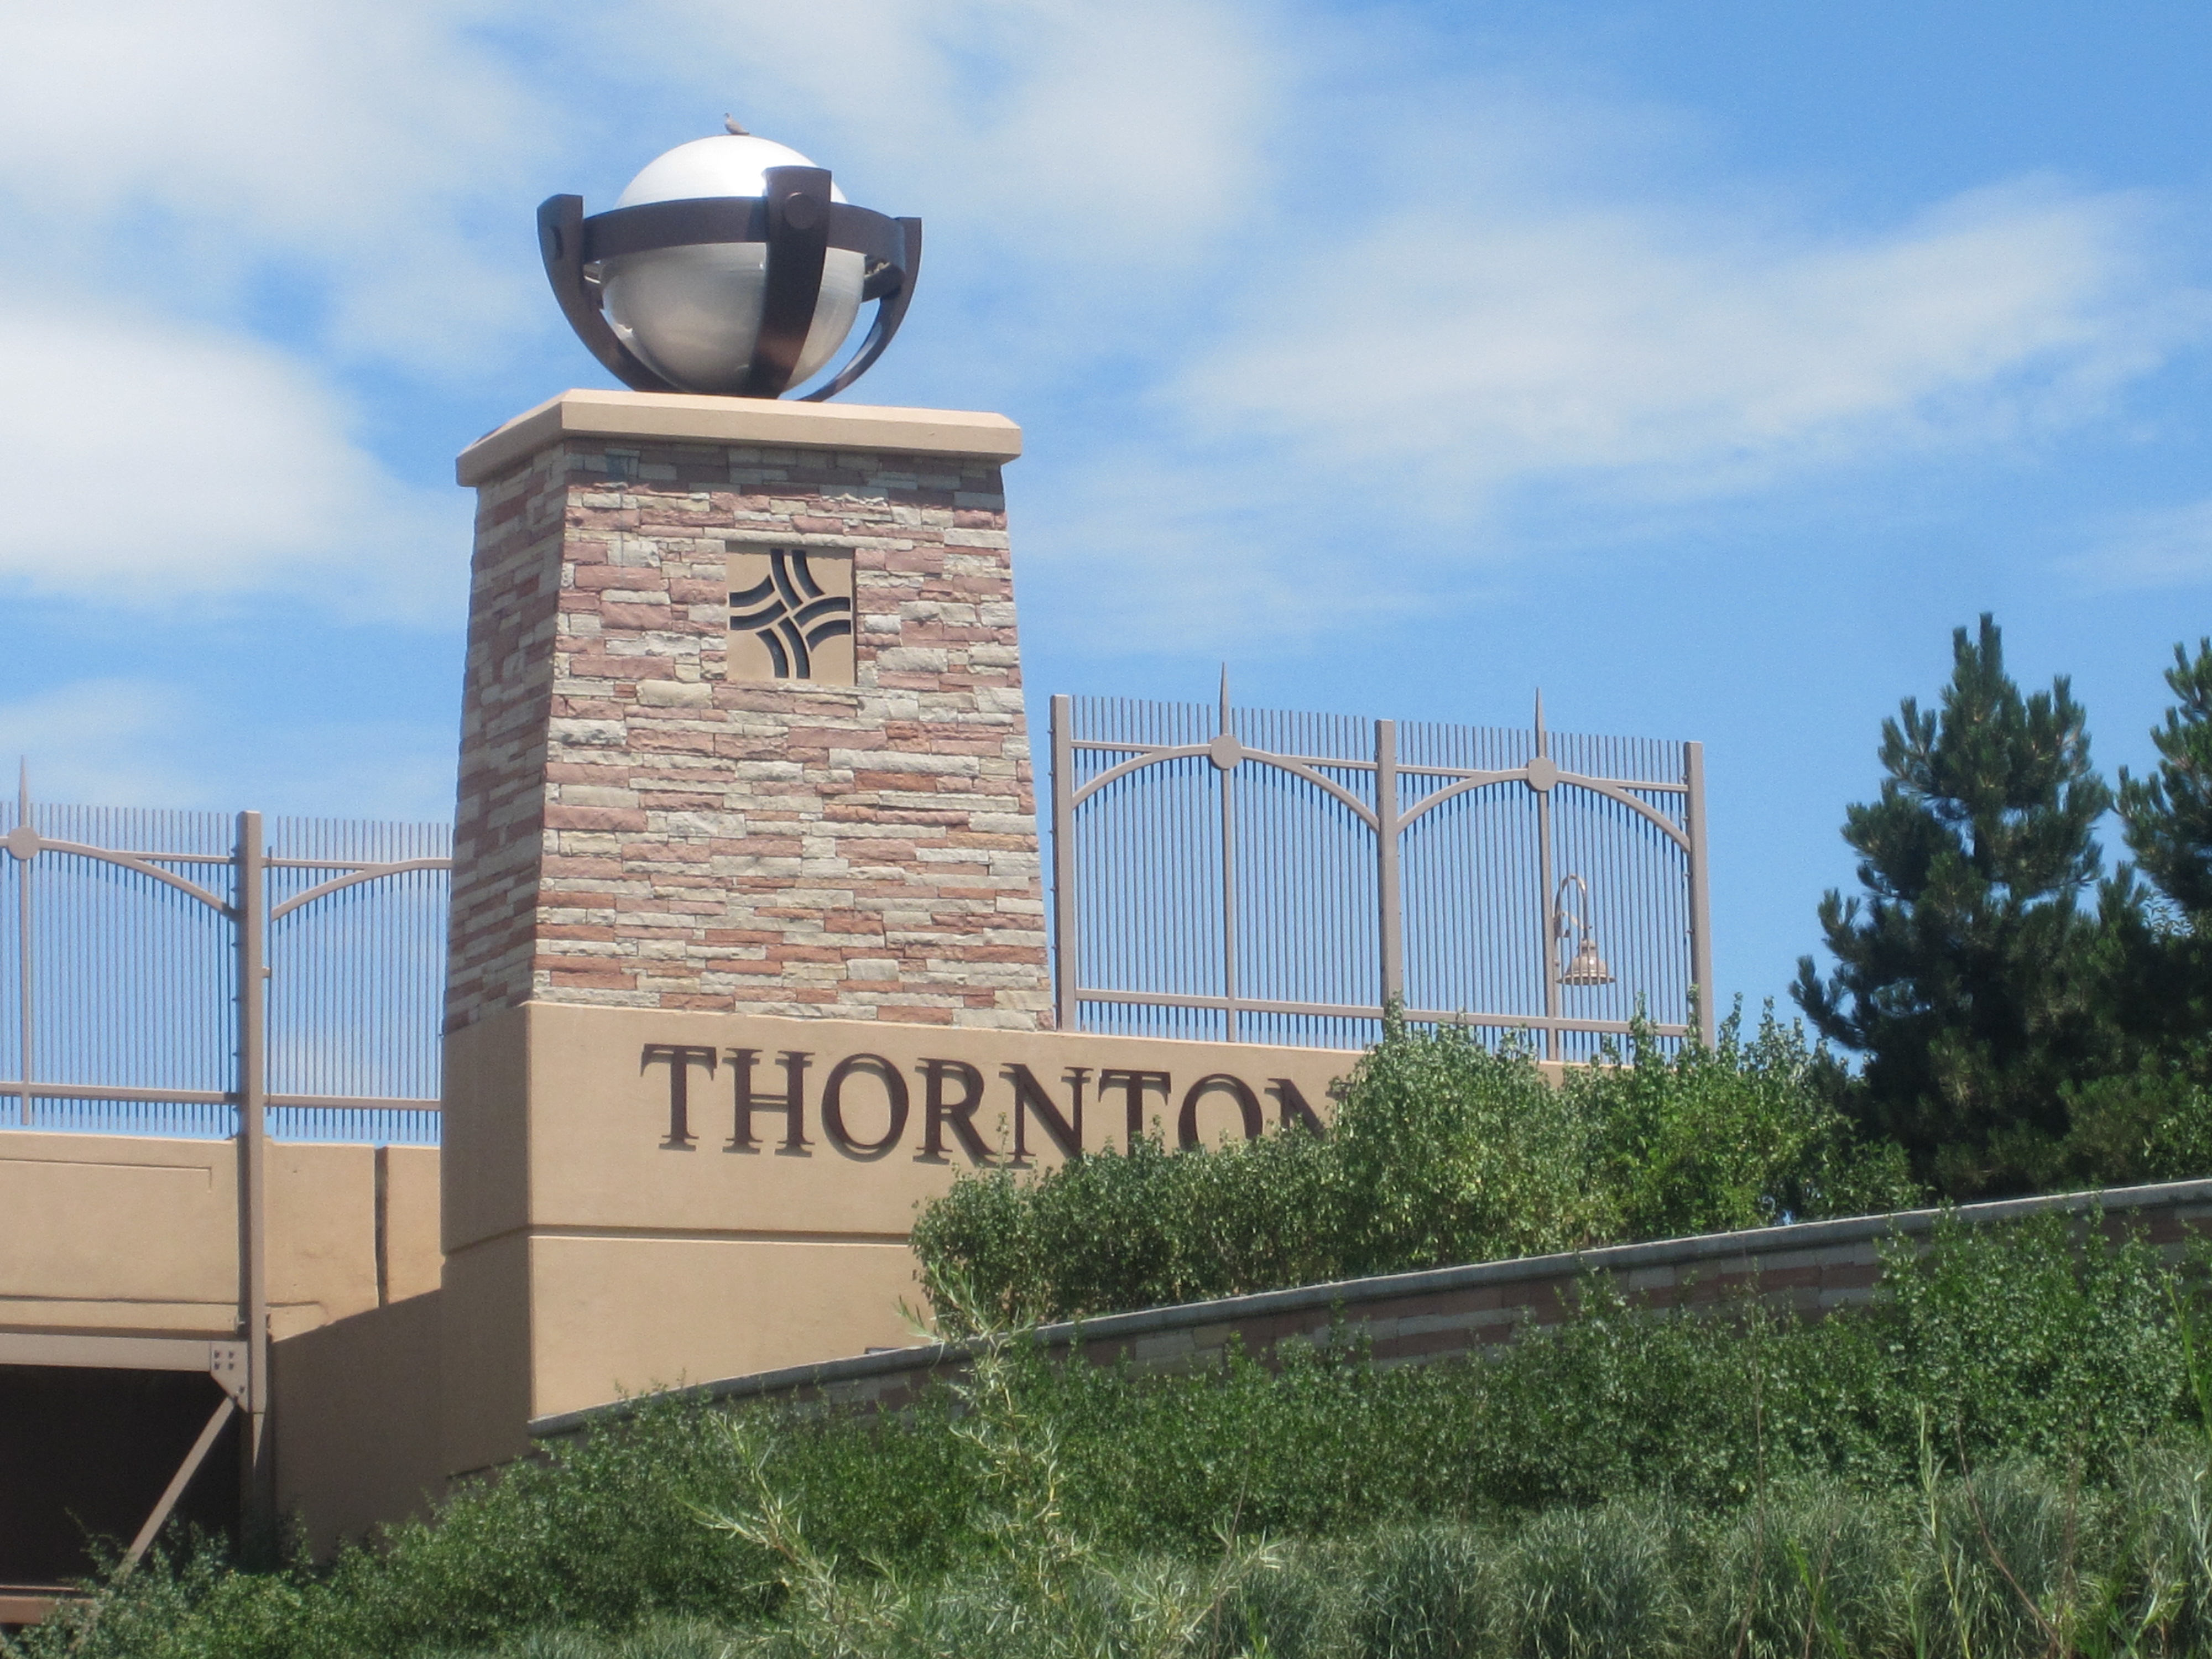 thornton colorado